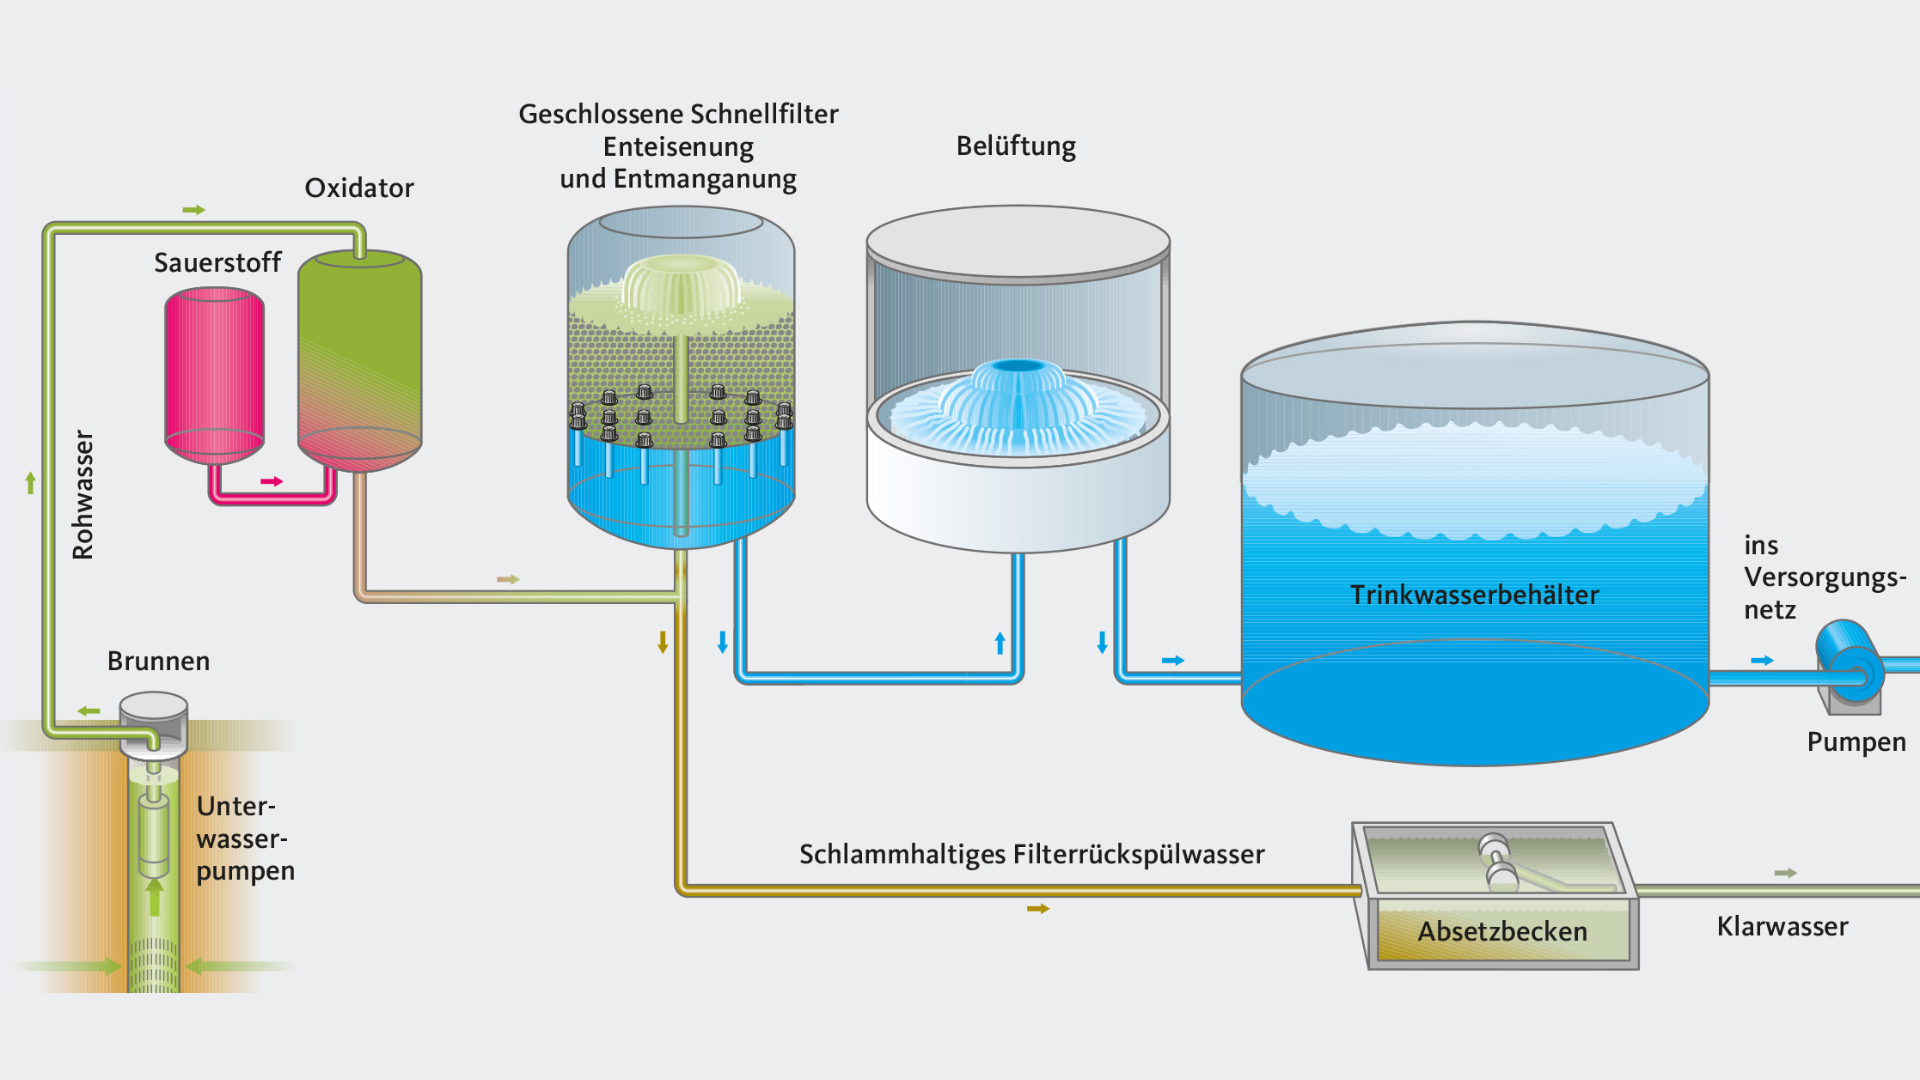 Flow chart of water treatment process at Hamburg Waldörfer waterworks - illustration